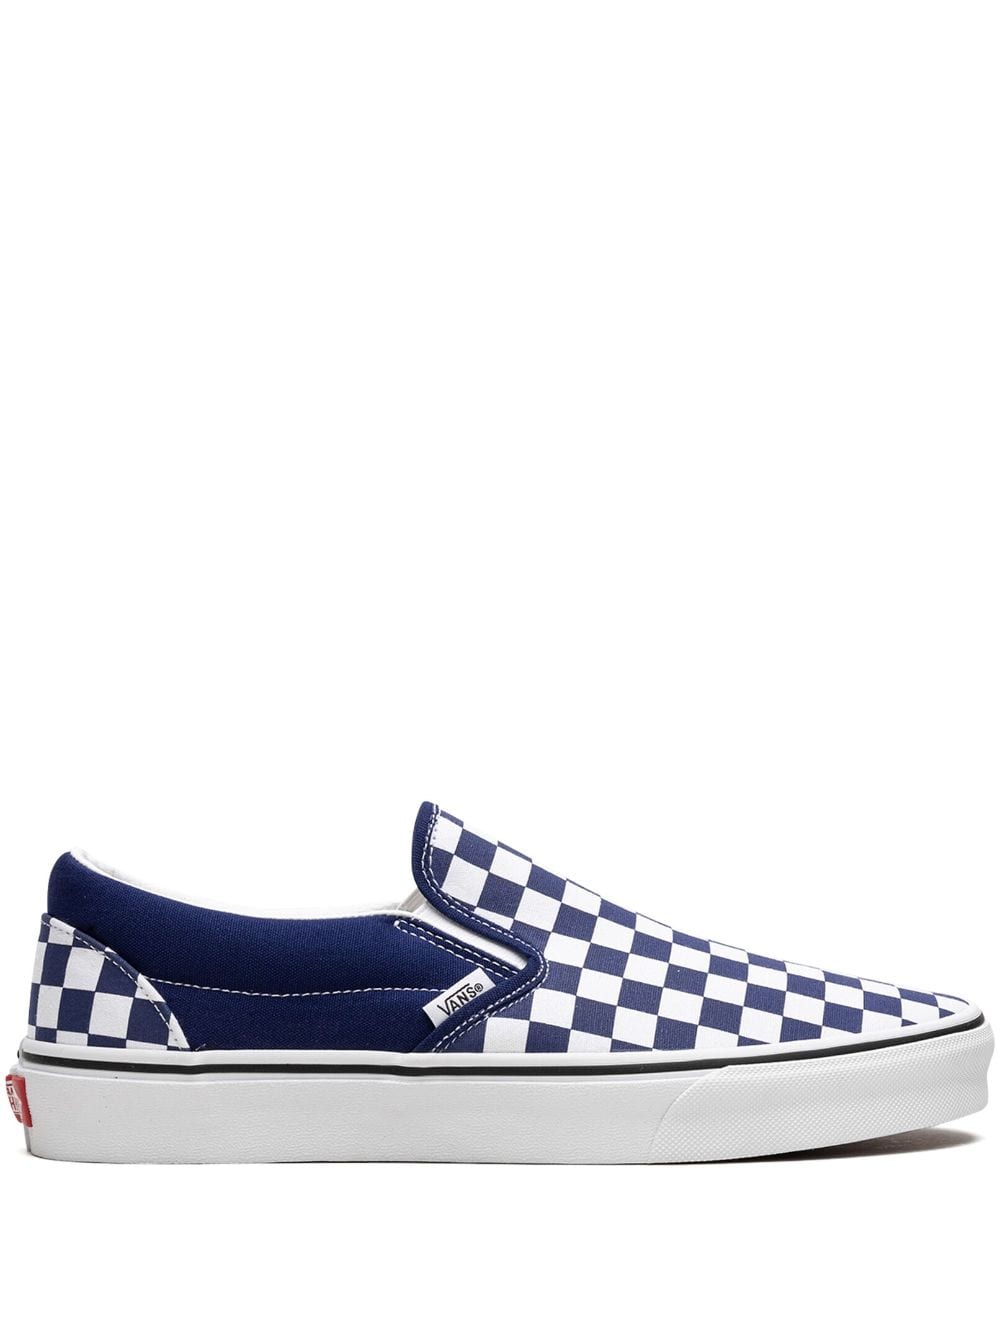 Vans Classic Slip-On Checkerboard "Beacon Blue" sneakers von Vans